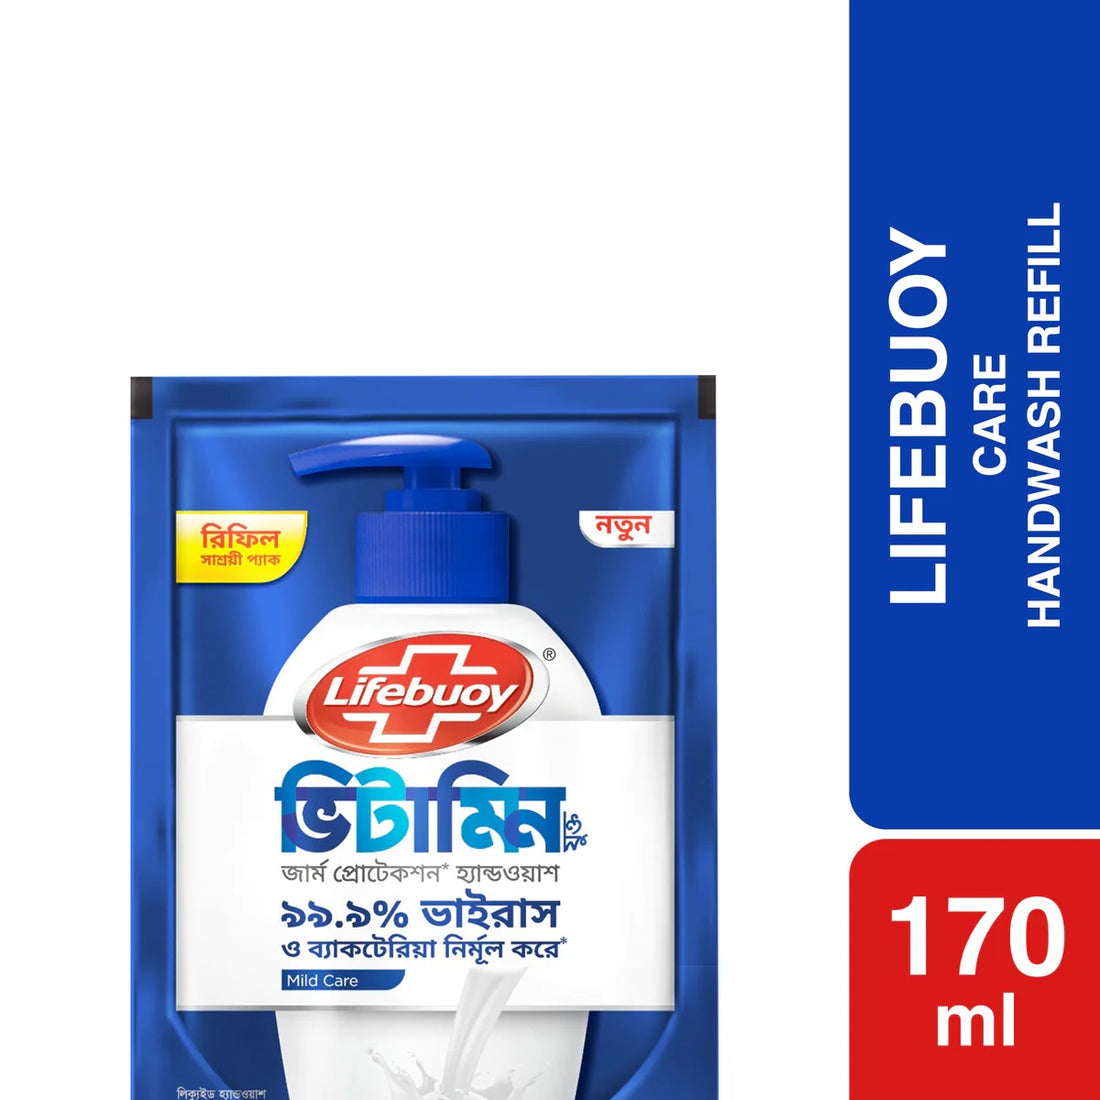 Lifebuoy Handwash (Soap) Care Refill - 170ml